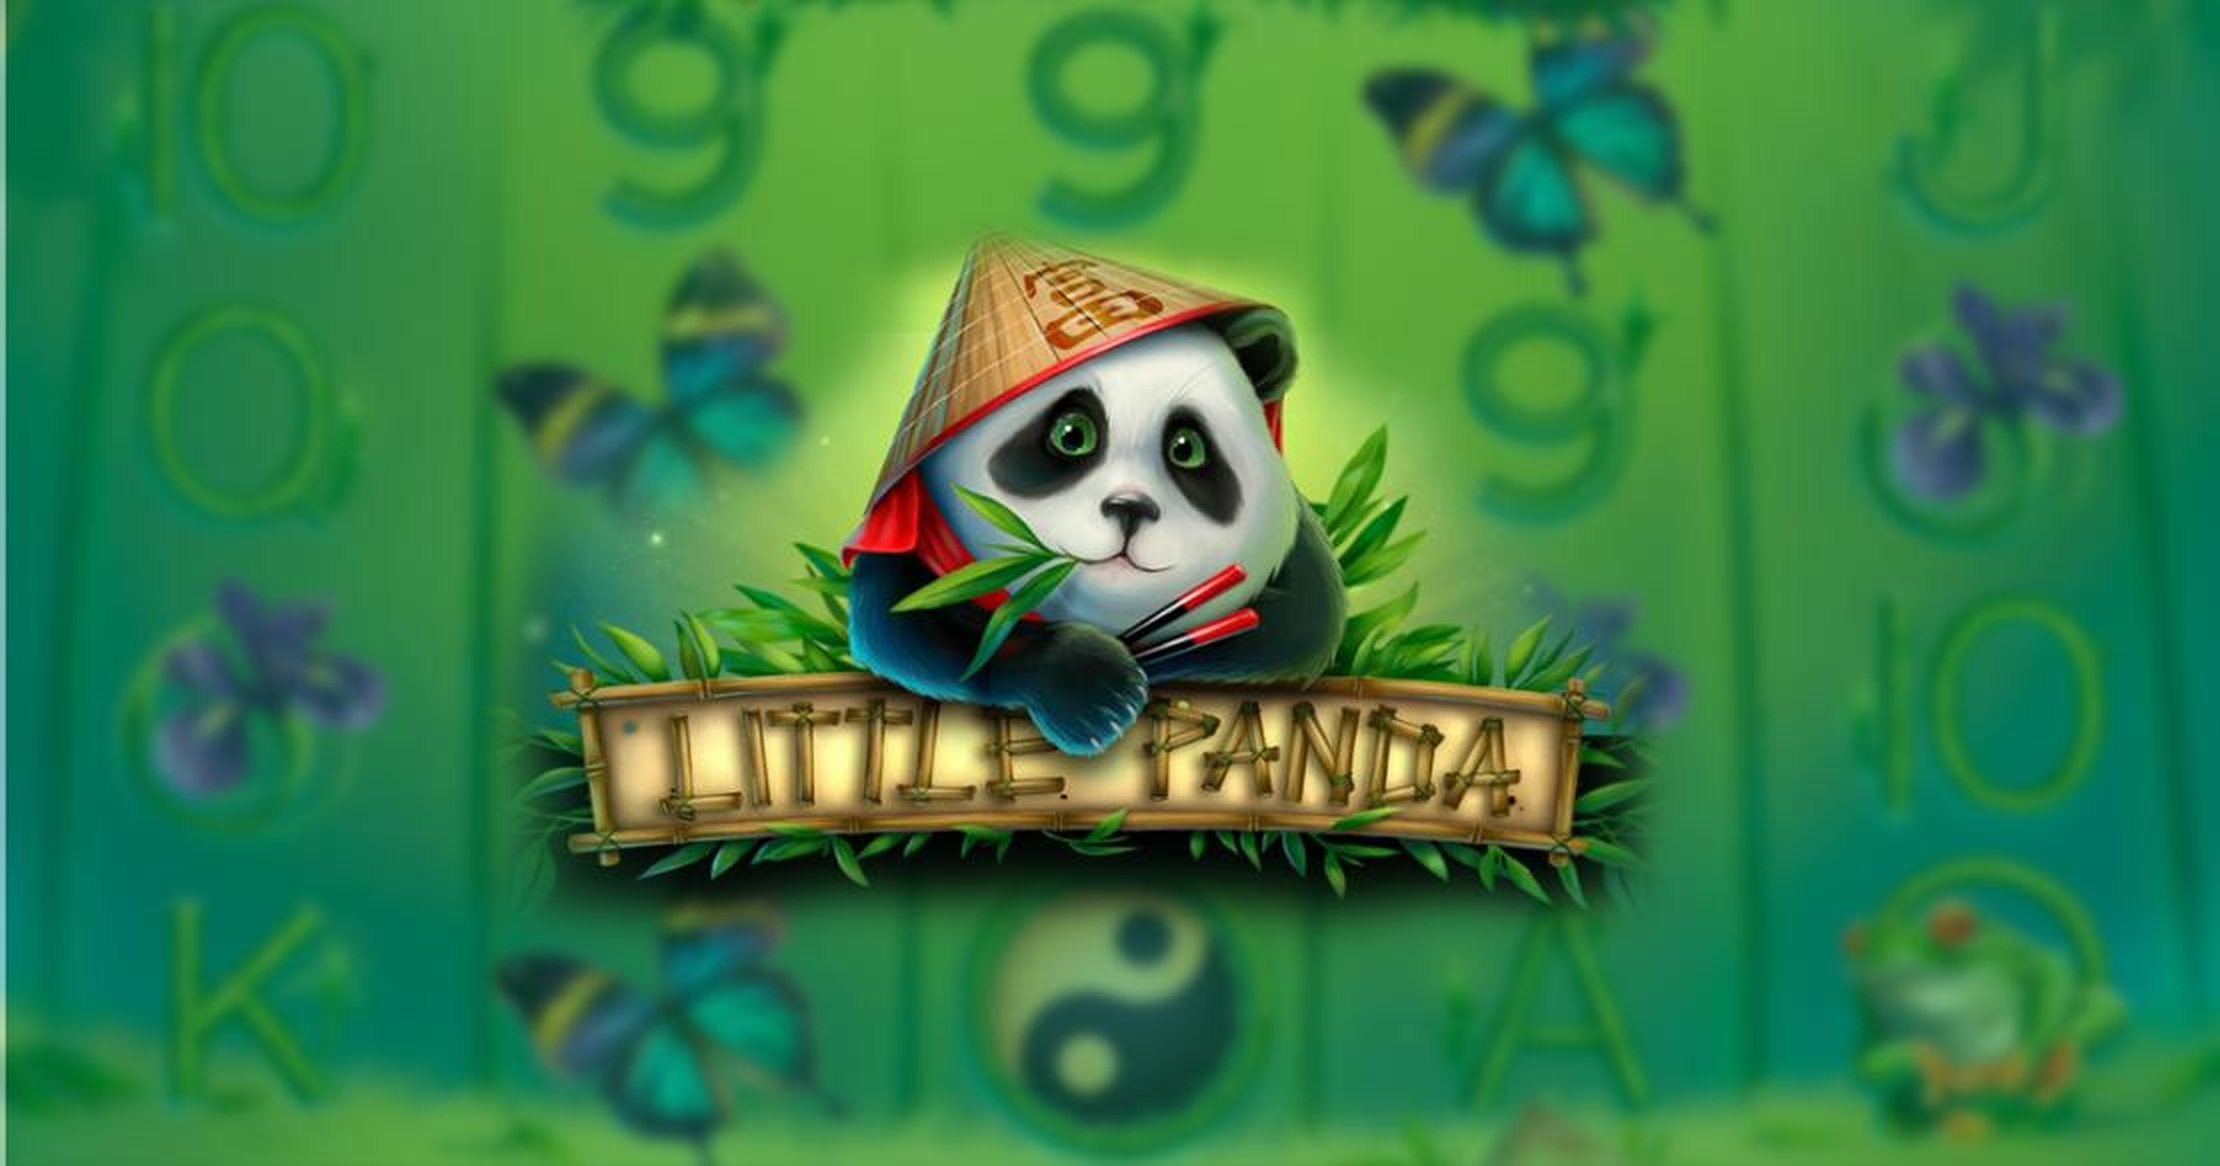 Little Panda demo